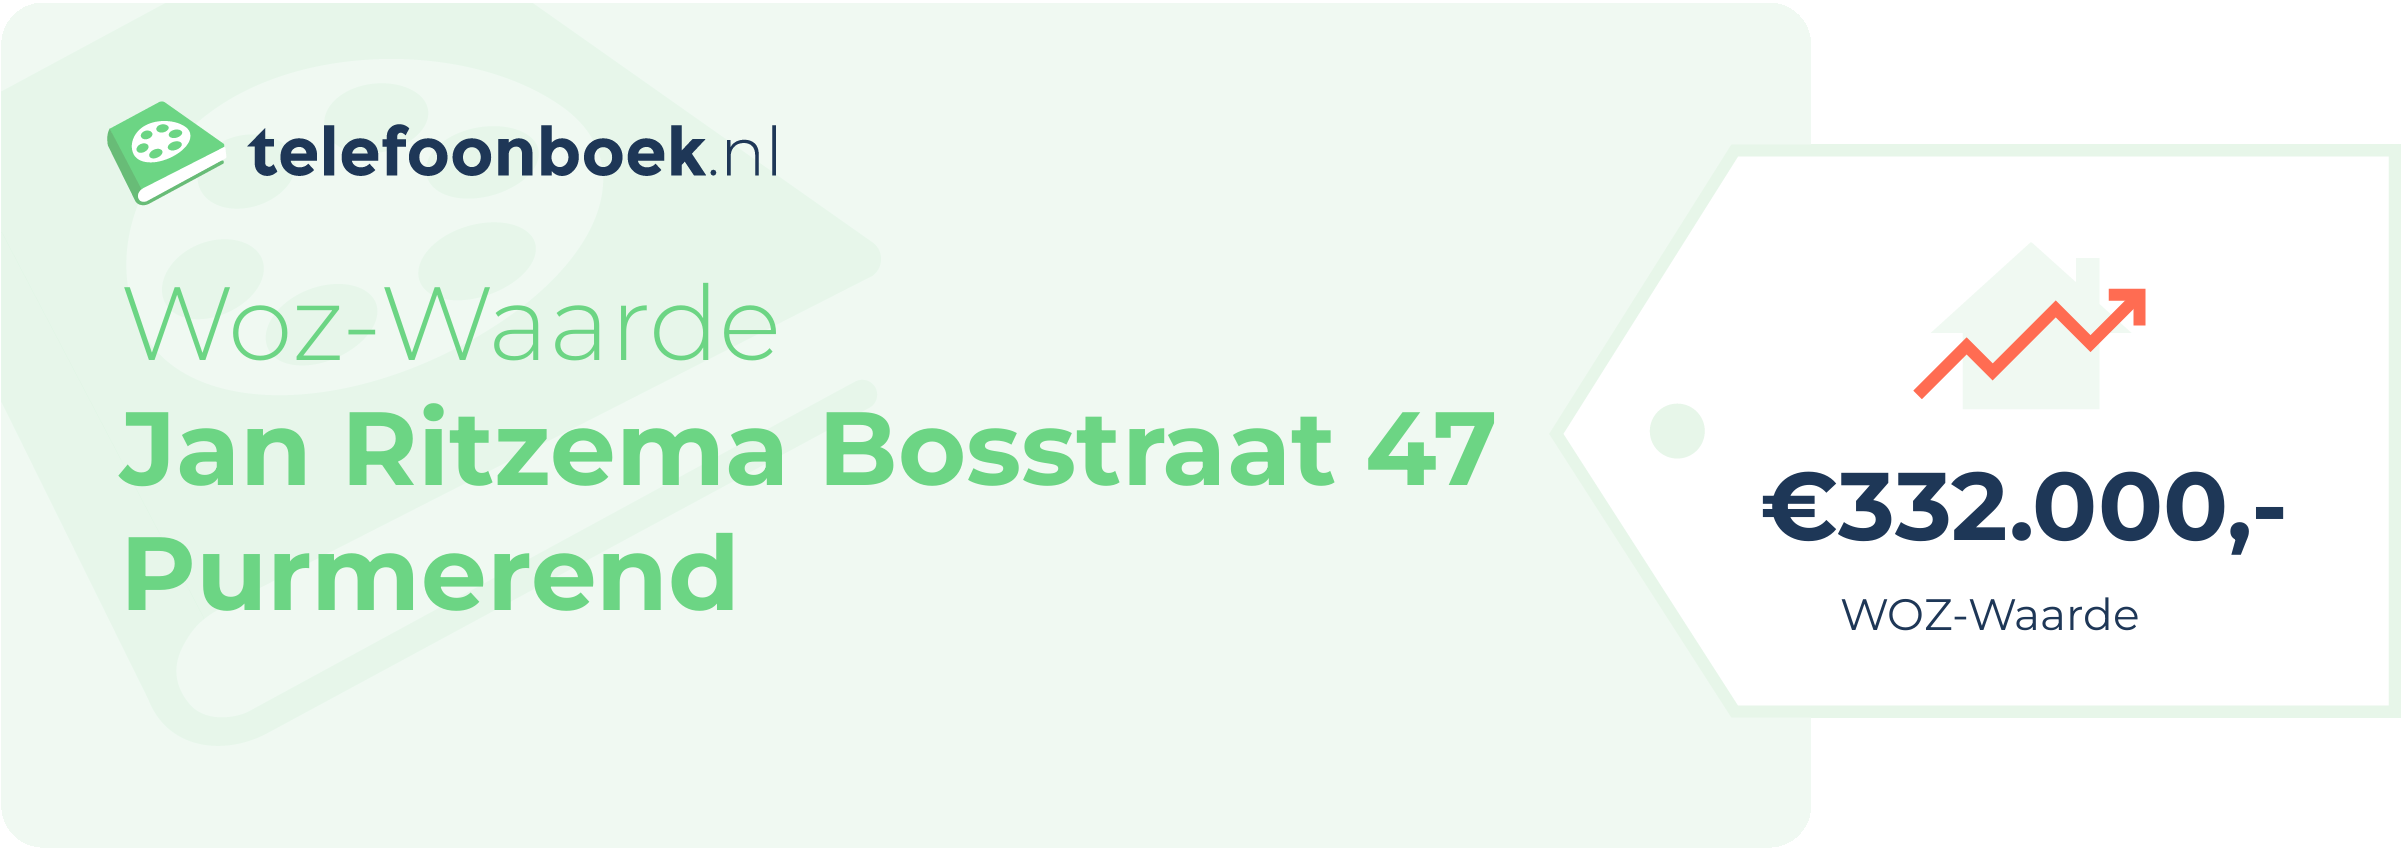 WOZ-waarde Jan Ritzema Bosstraat 47 Purmerend